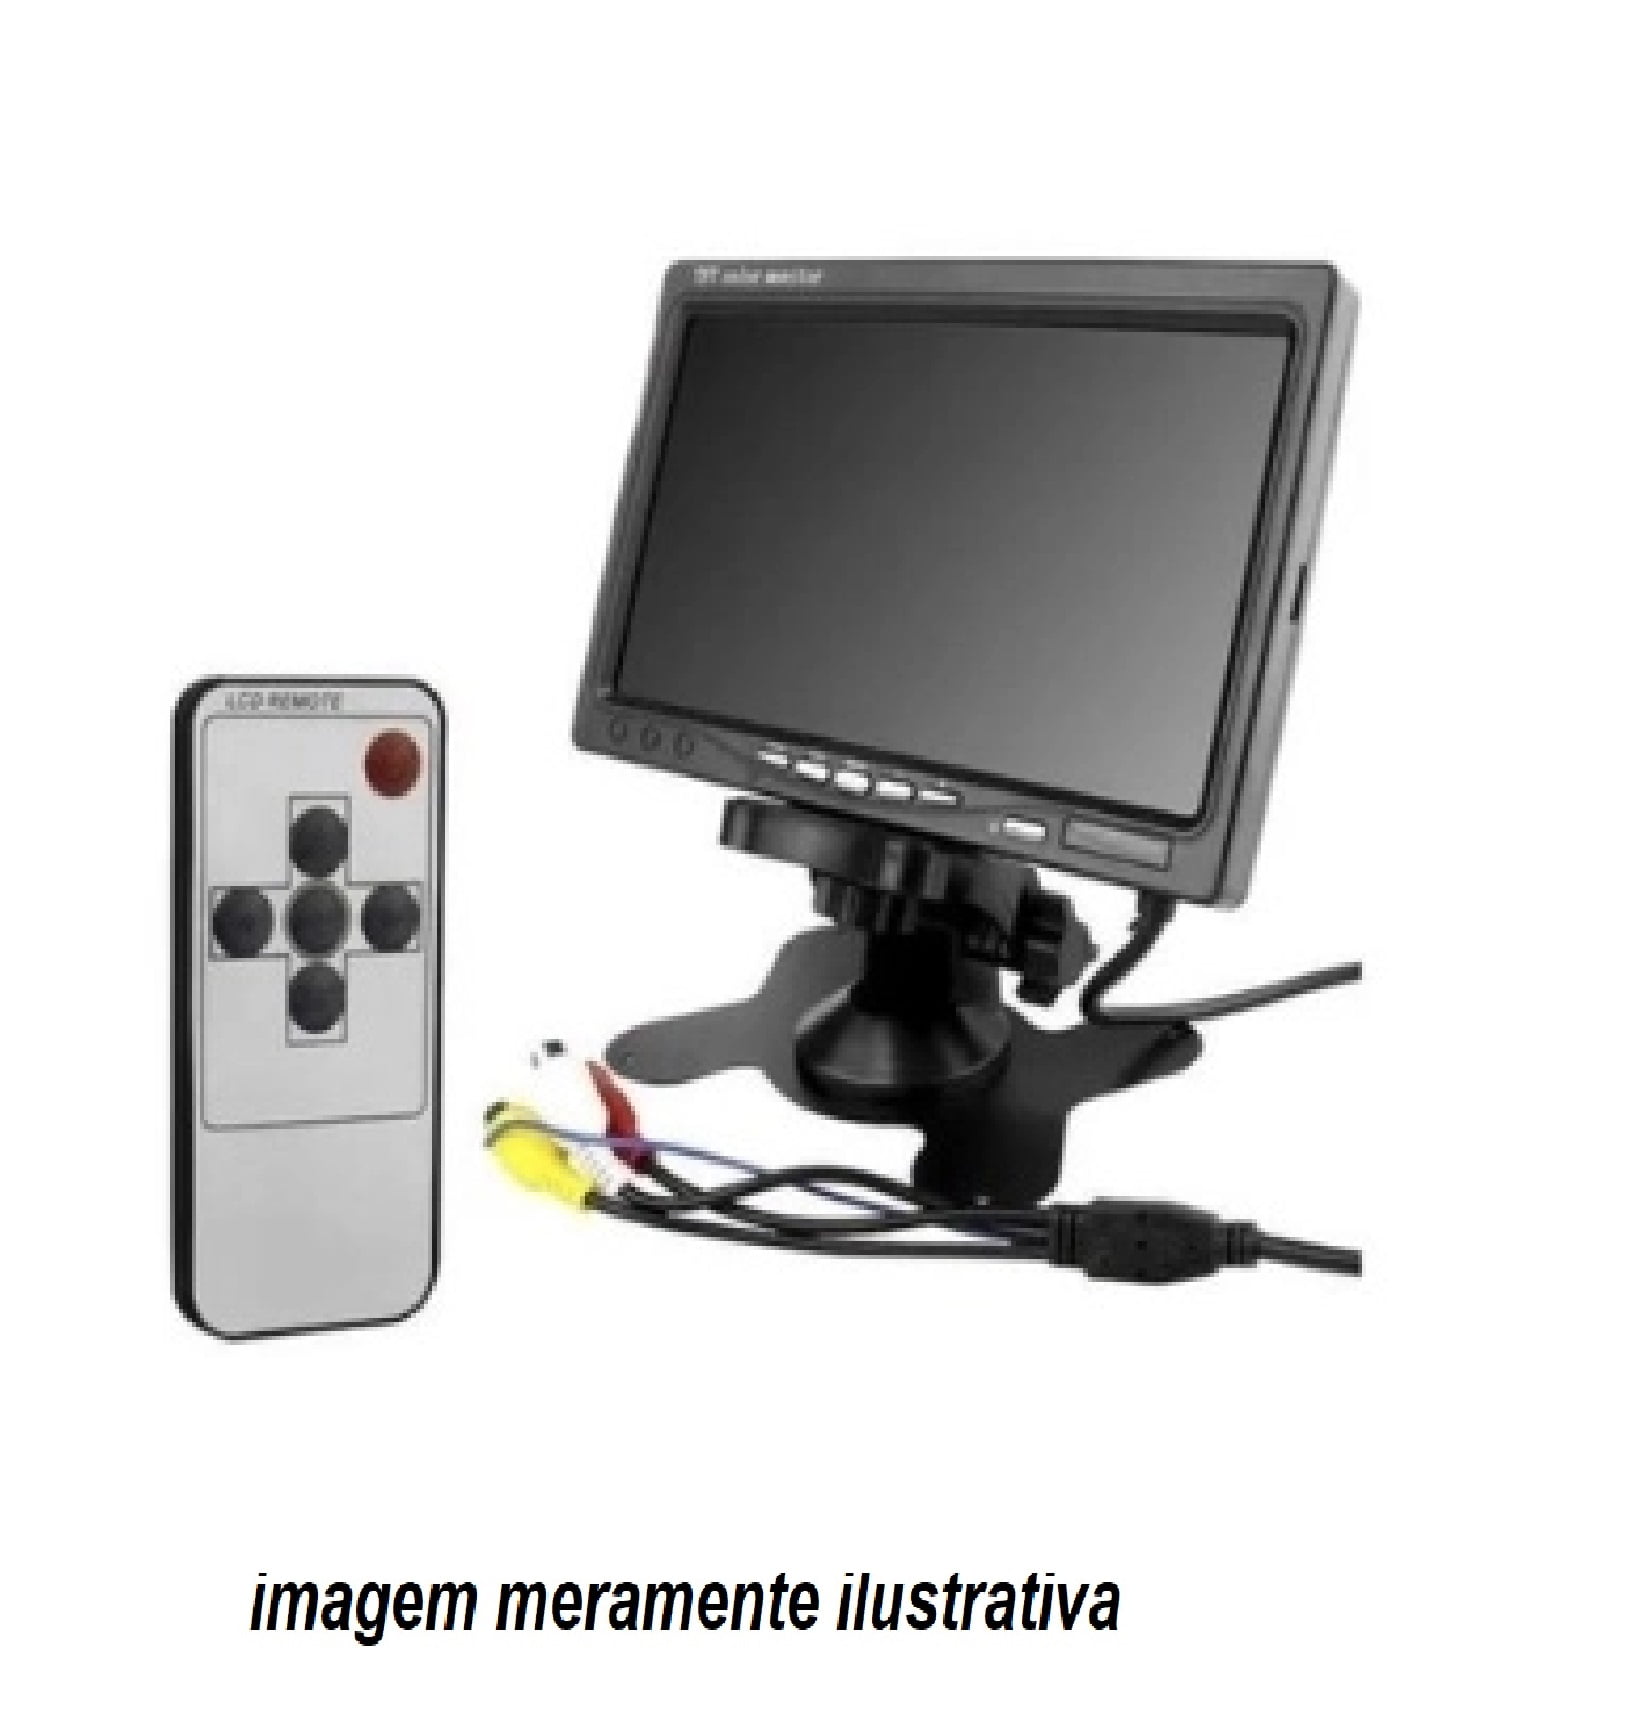 TELA MONITOR VEICULAR ANALOGICA 7 LCD PORTÁTIL CFTV PA